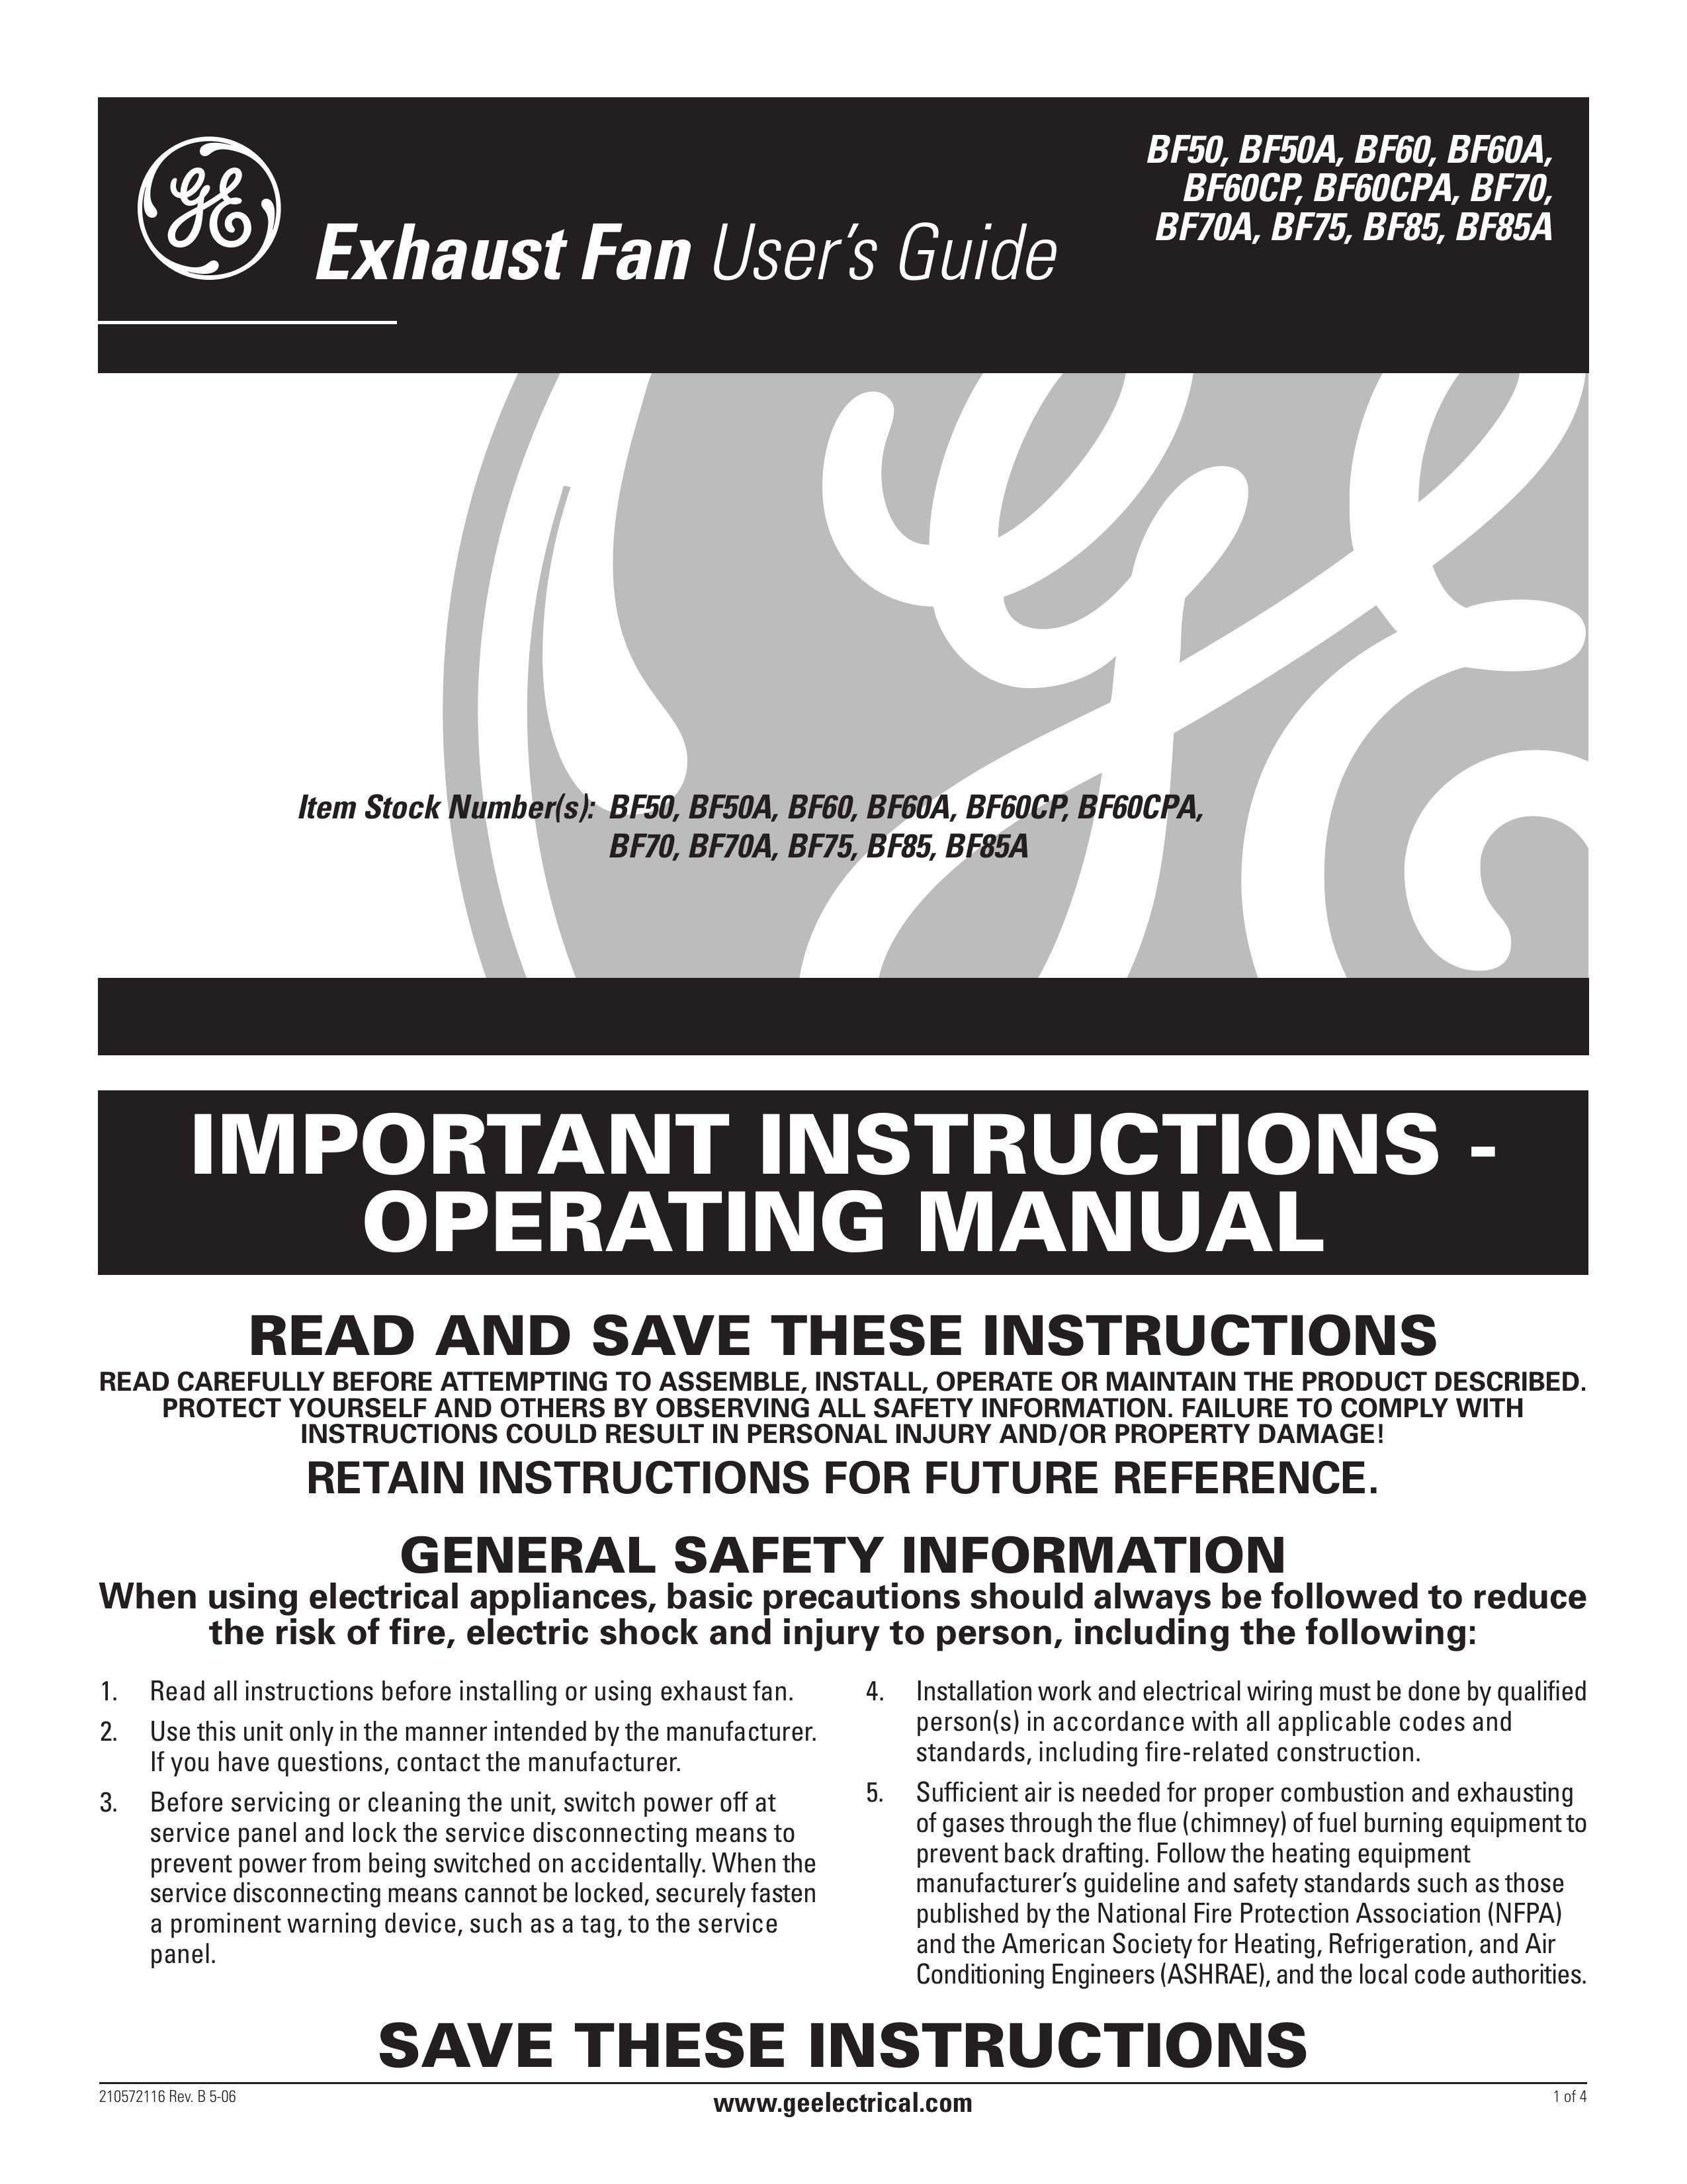 GE BF70A Ventilation Hood User Manual